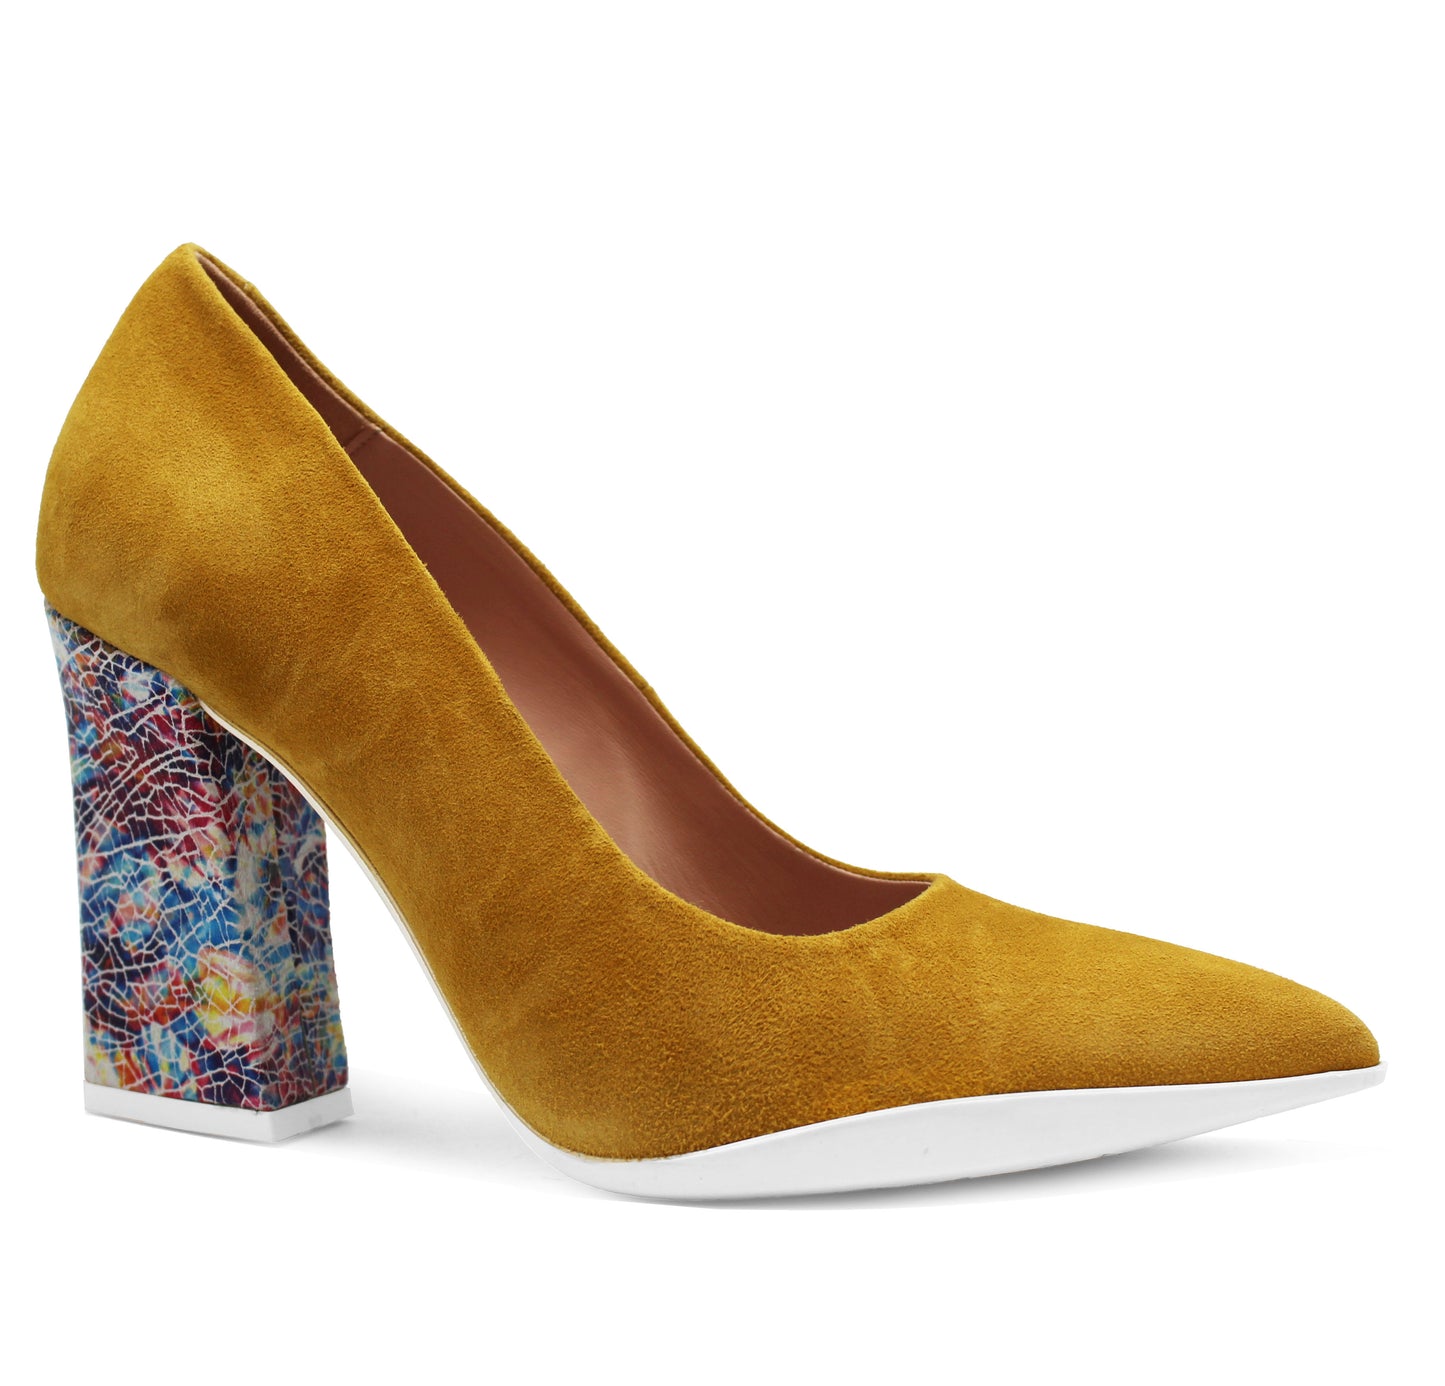 Pailette - Mustard Yellow High heel shoe